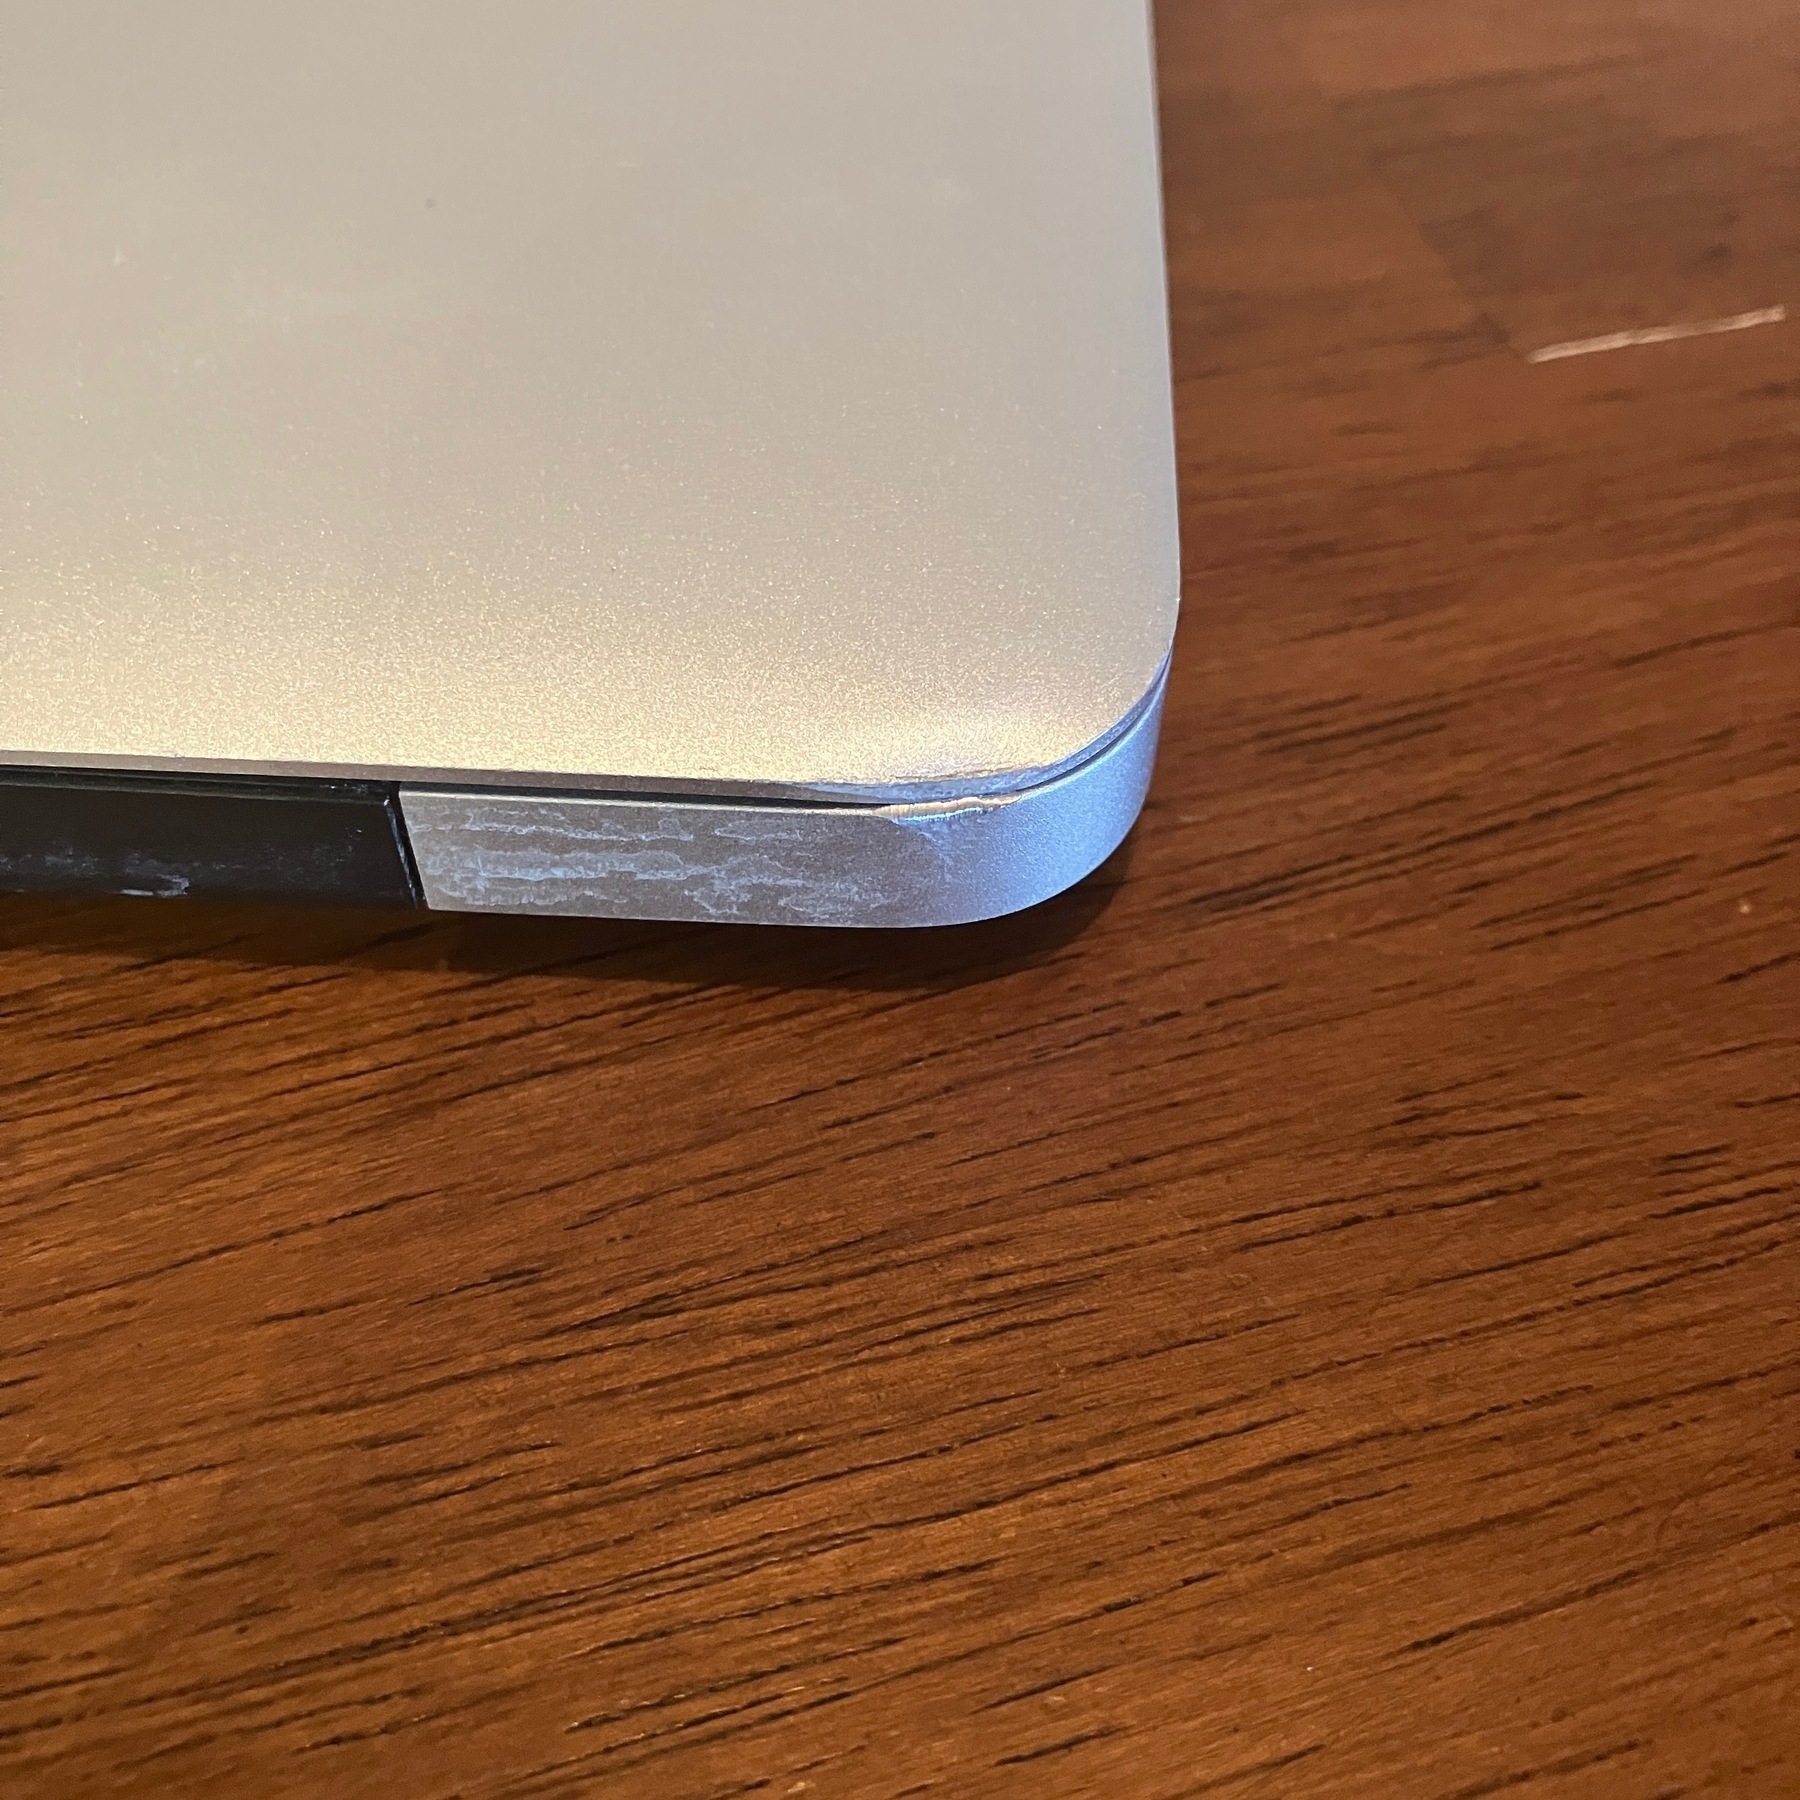 Dent in the 2012 MacBook Air